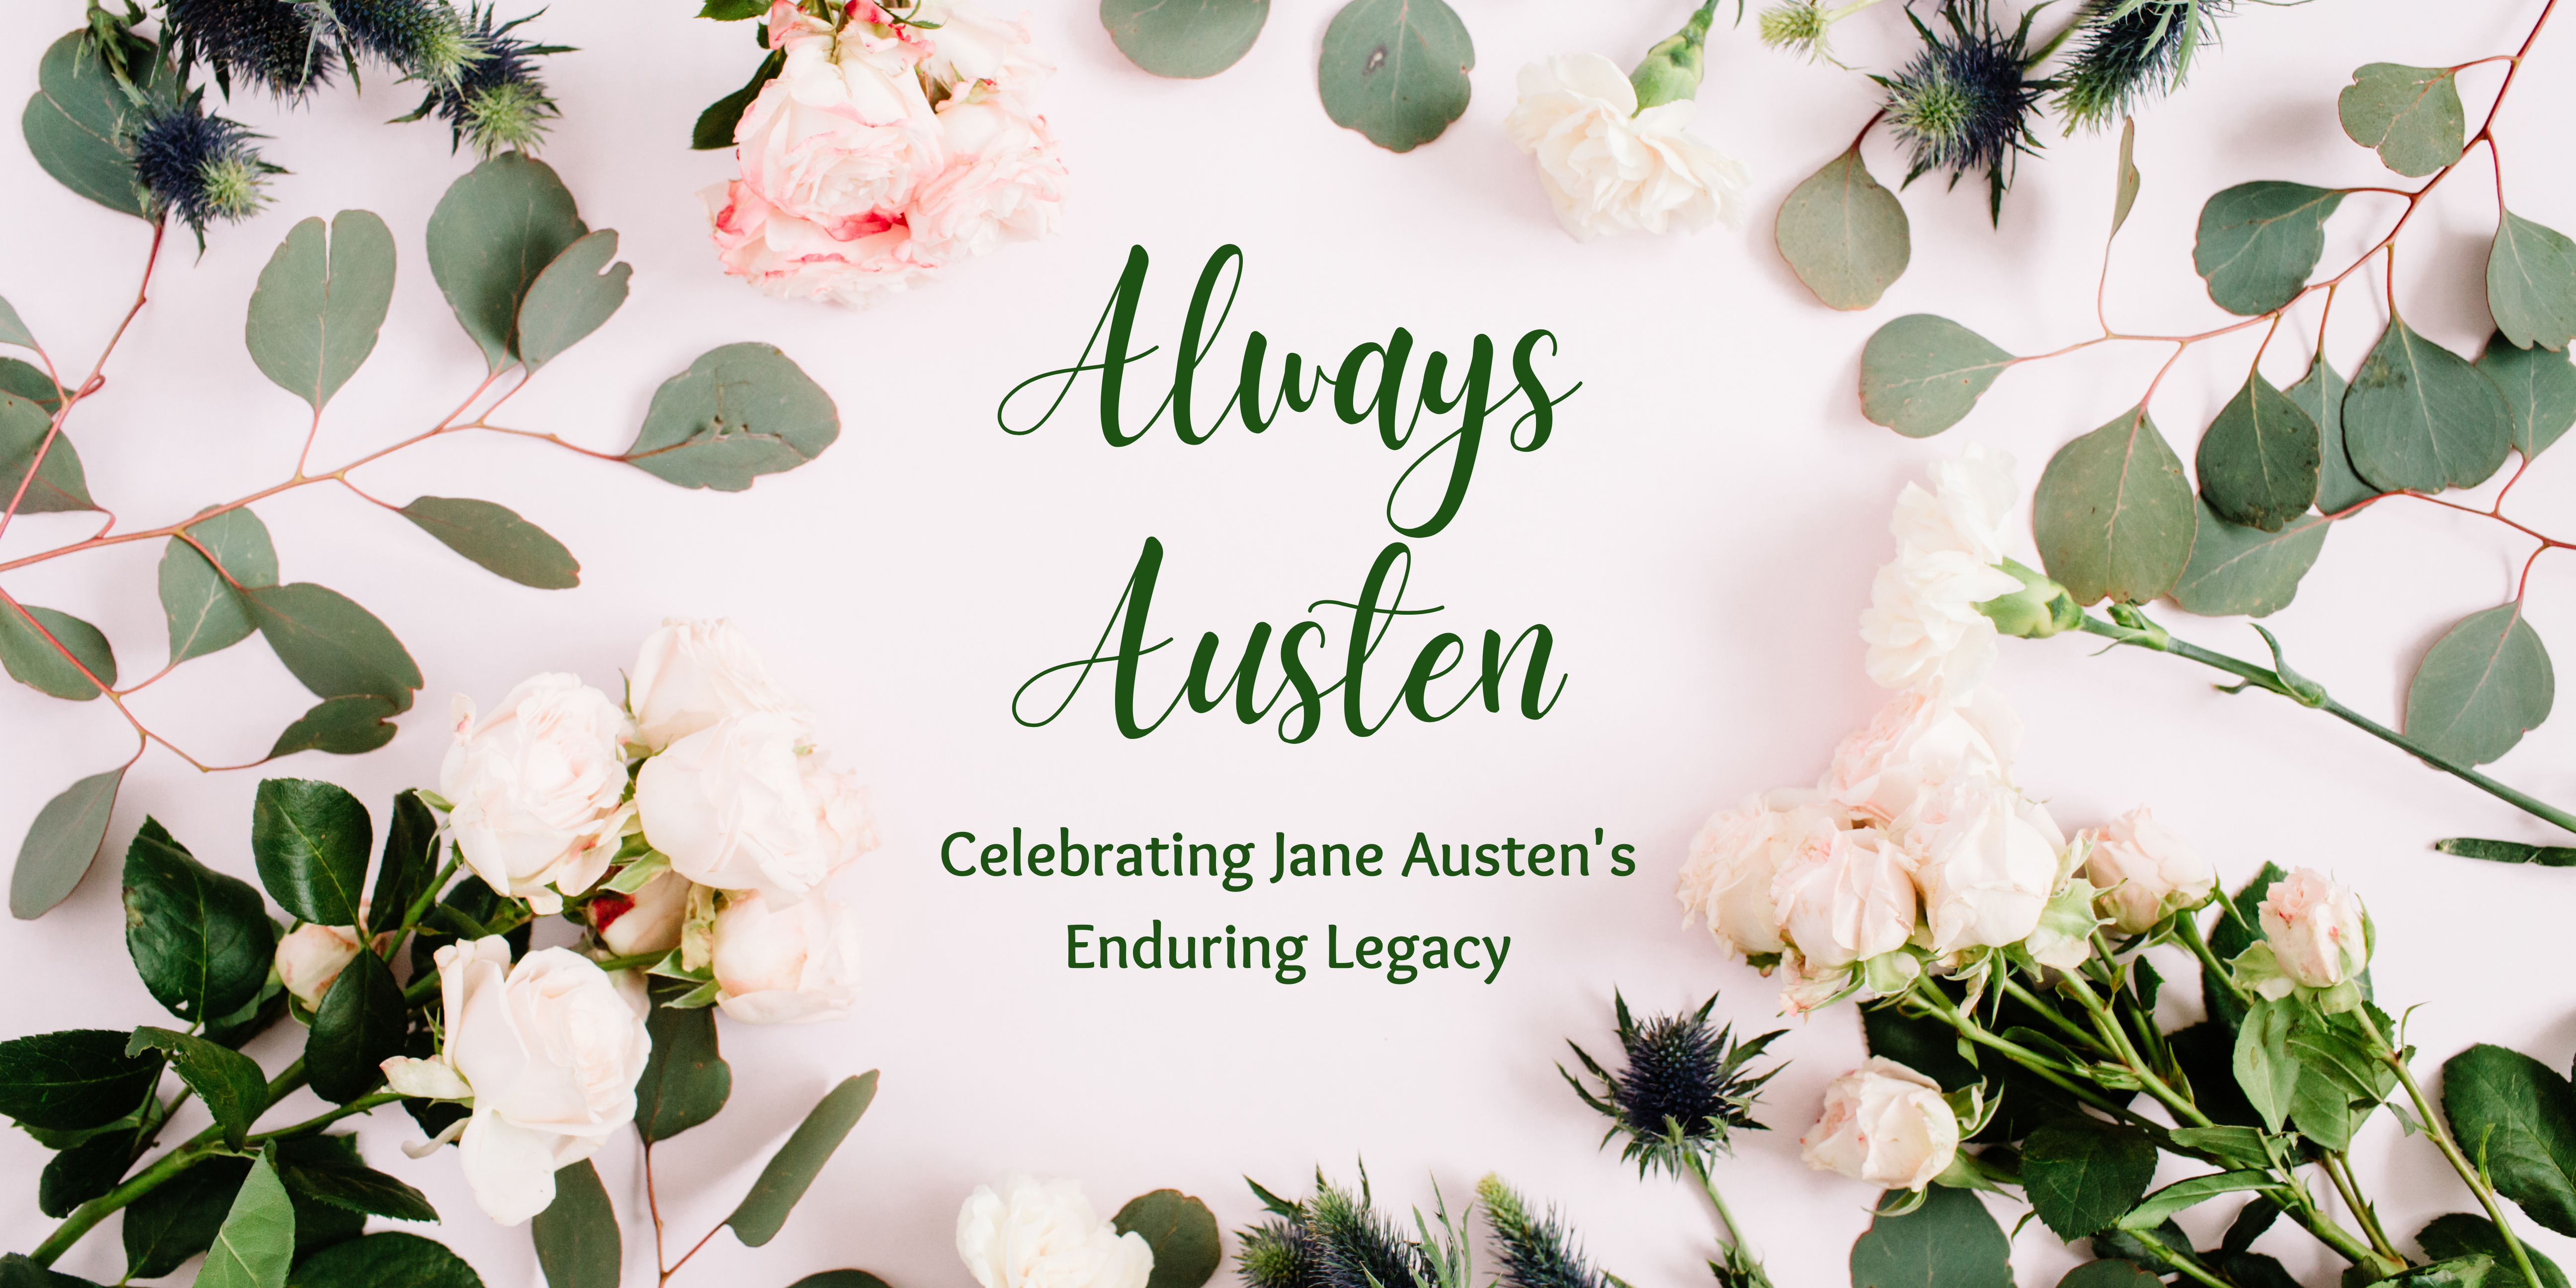 New Website for Austen Lovers!